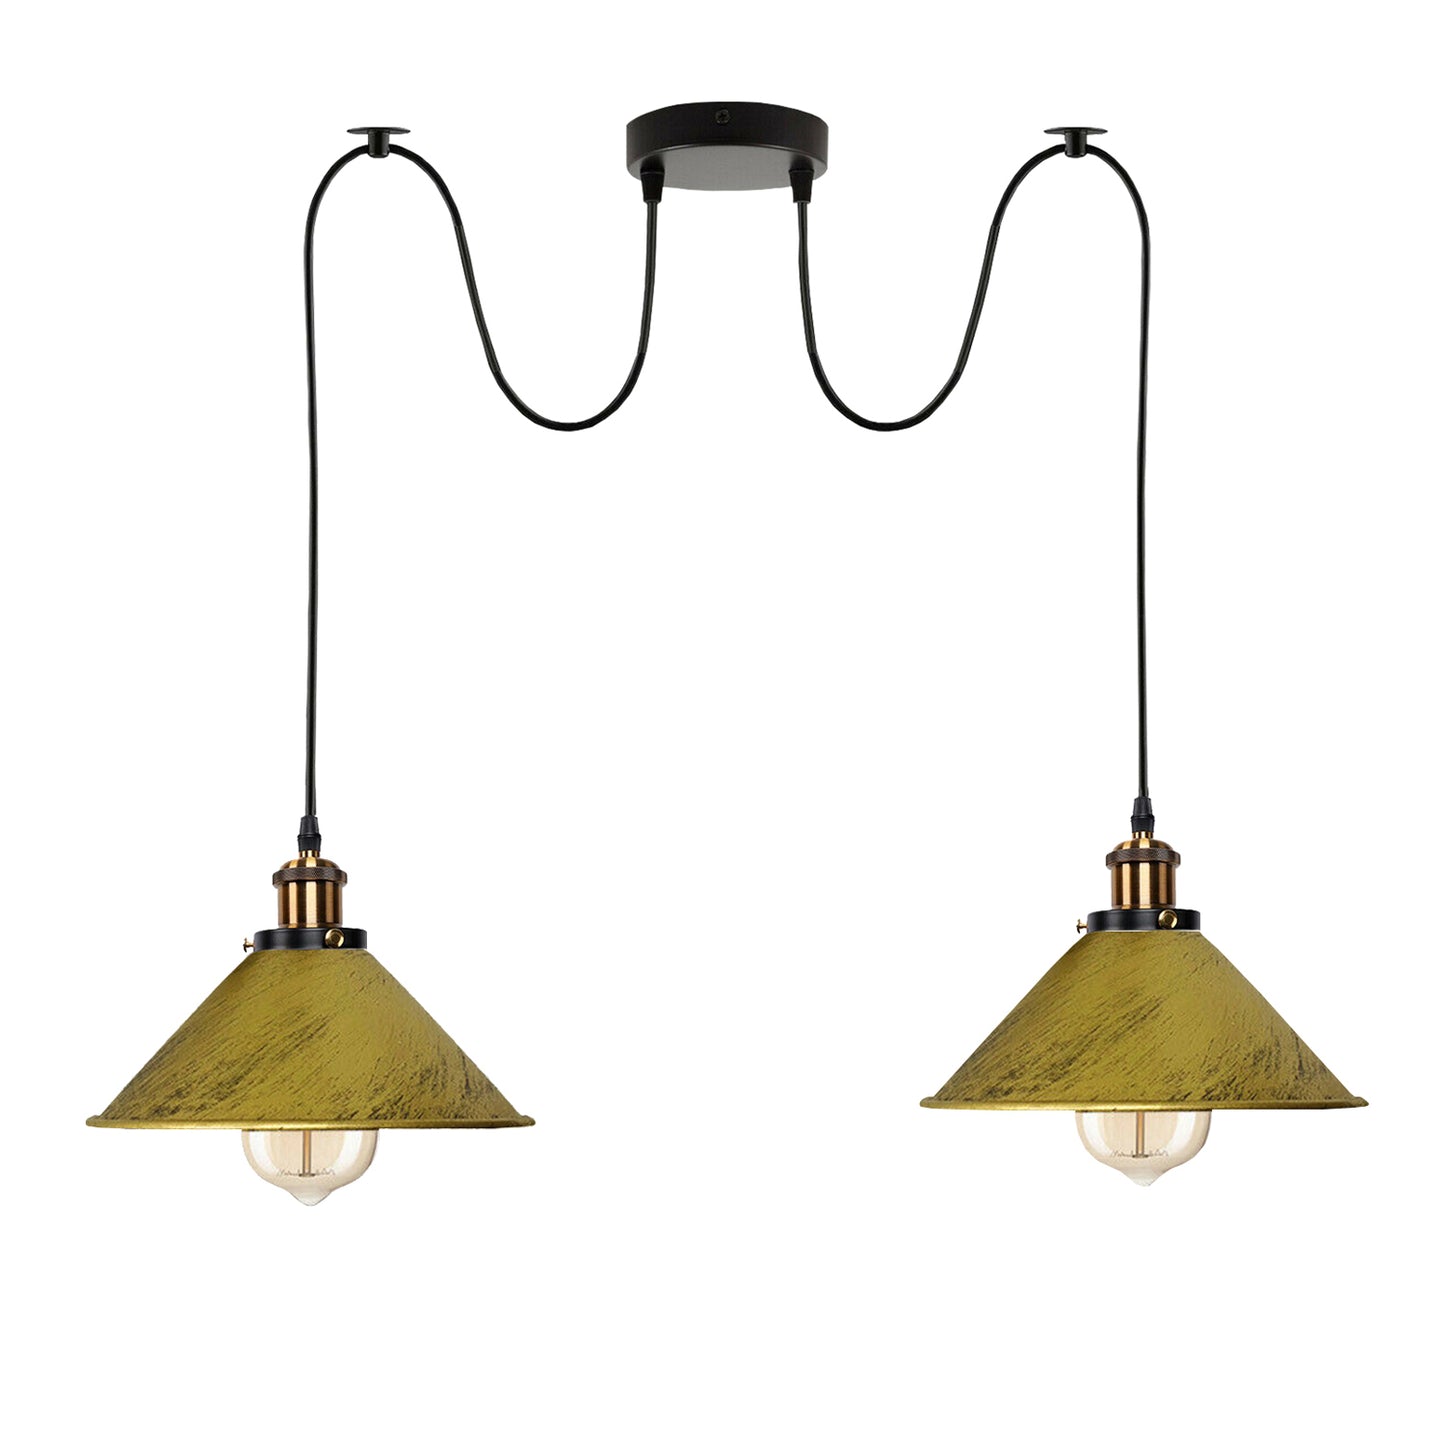 Spider Lamp Shades UK - Retro Brushed Brass Industrial Pendant Light